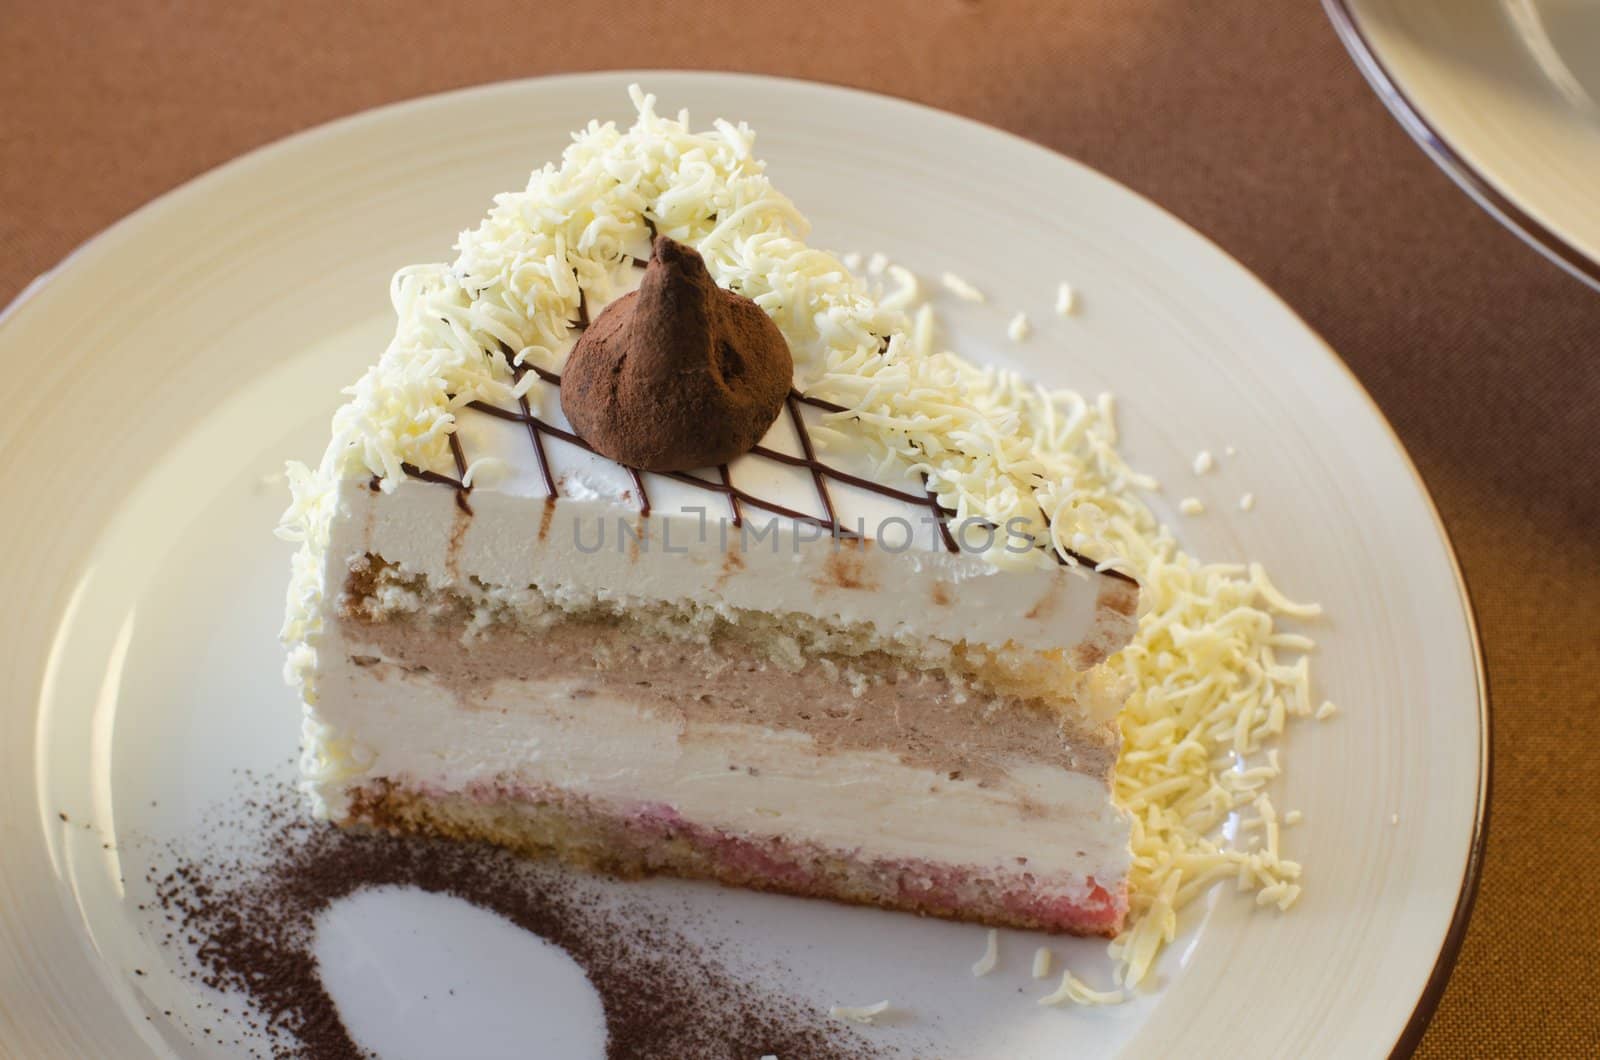 tasty cake at white plate closeup photo